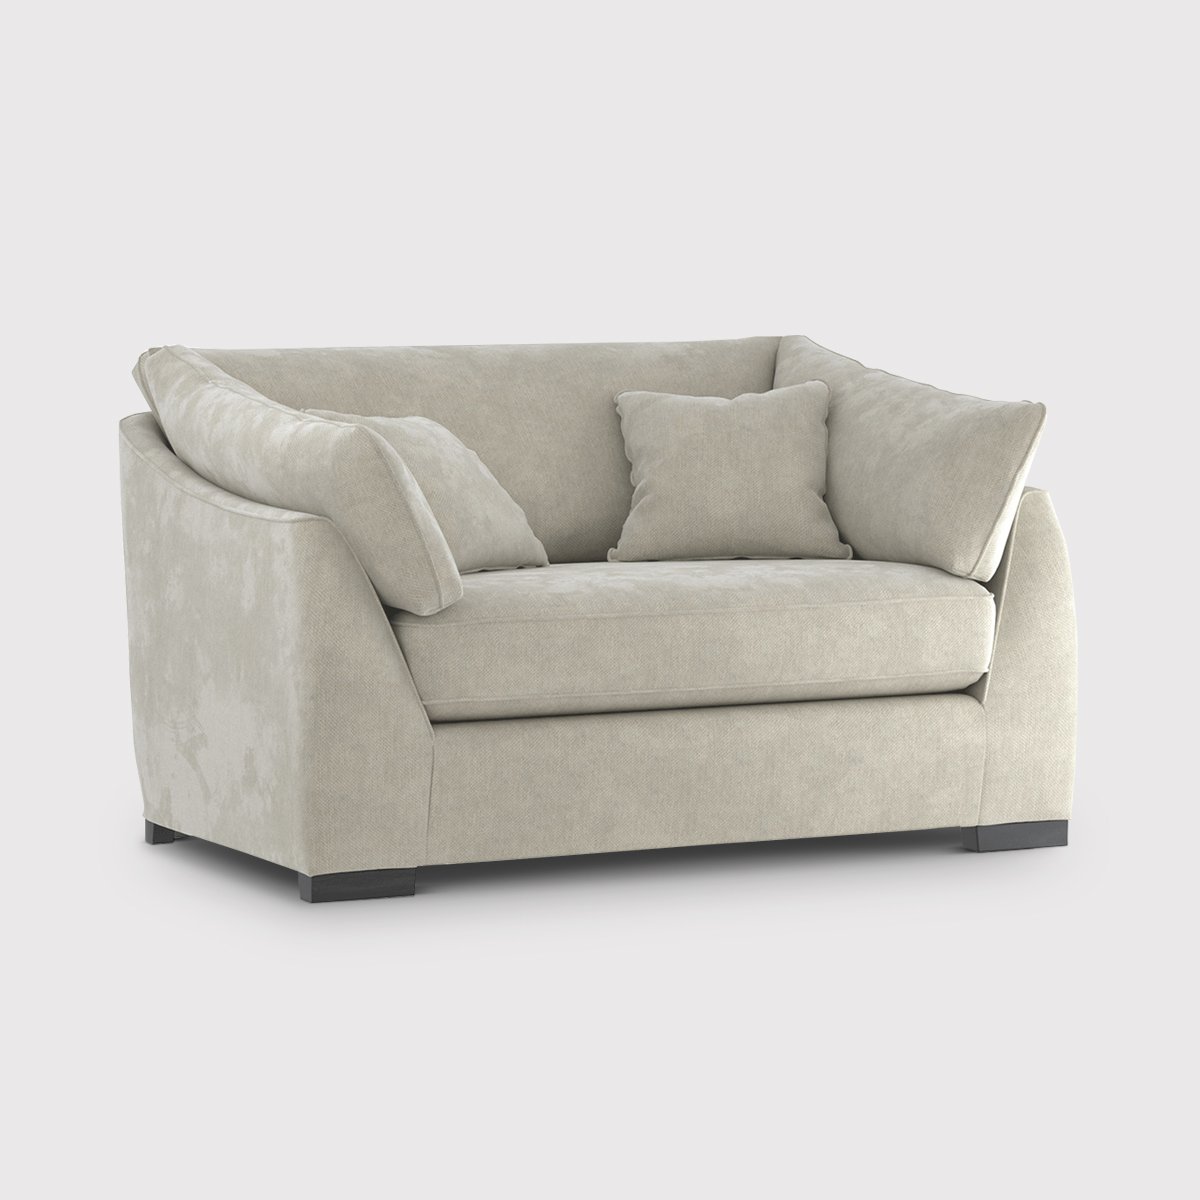 Borelly Snuggler Snuggle Chair, Grey Fabric | Barker & Stonehouse